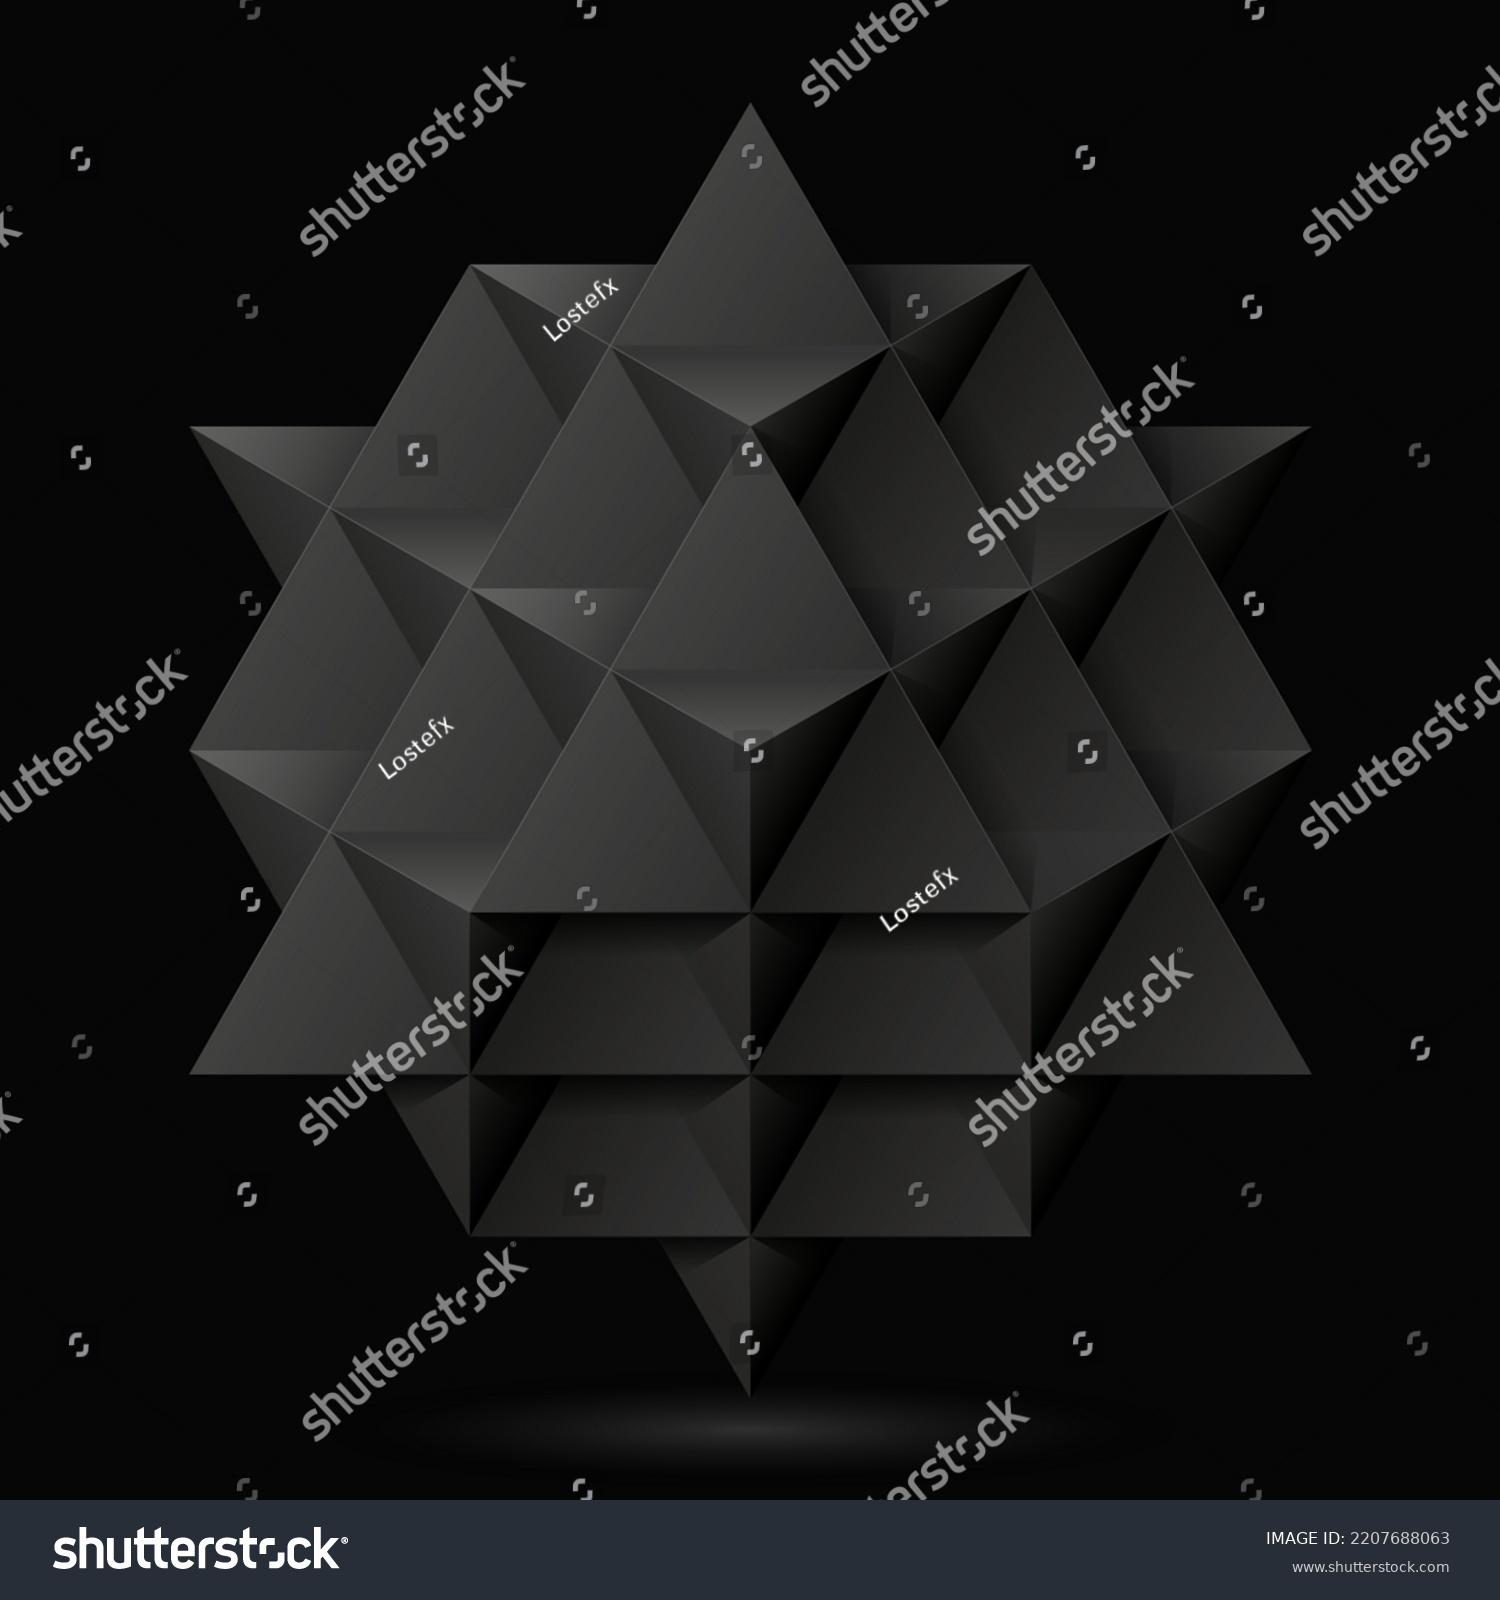 SVG of 64 tetrahedrons grid, sacred geometry svg